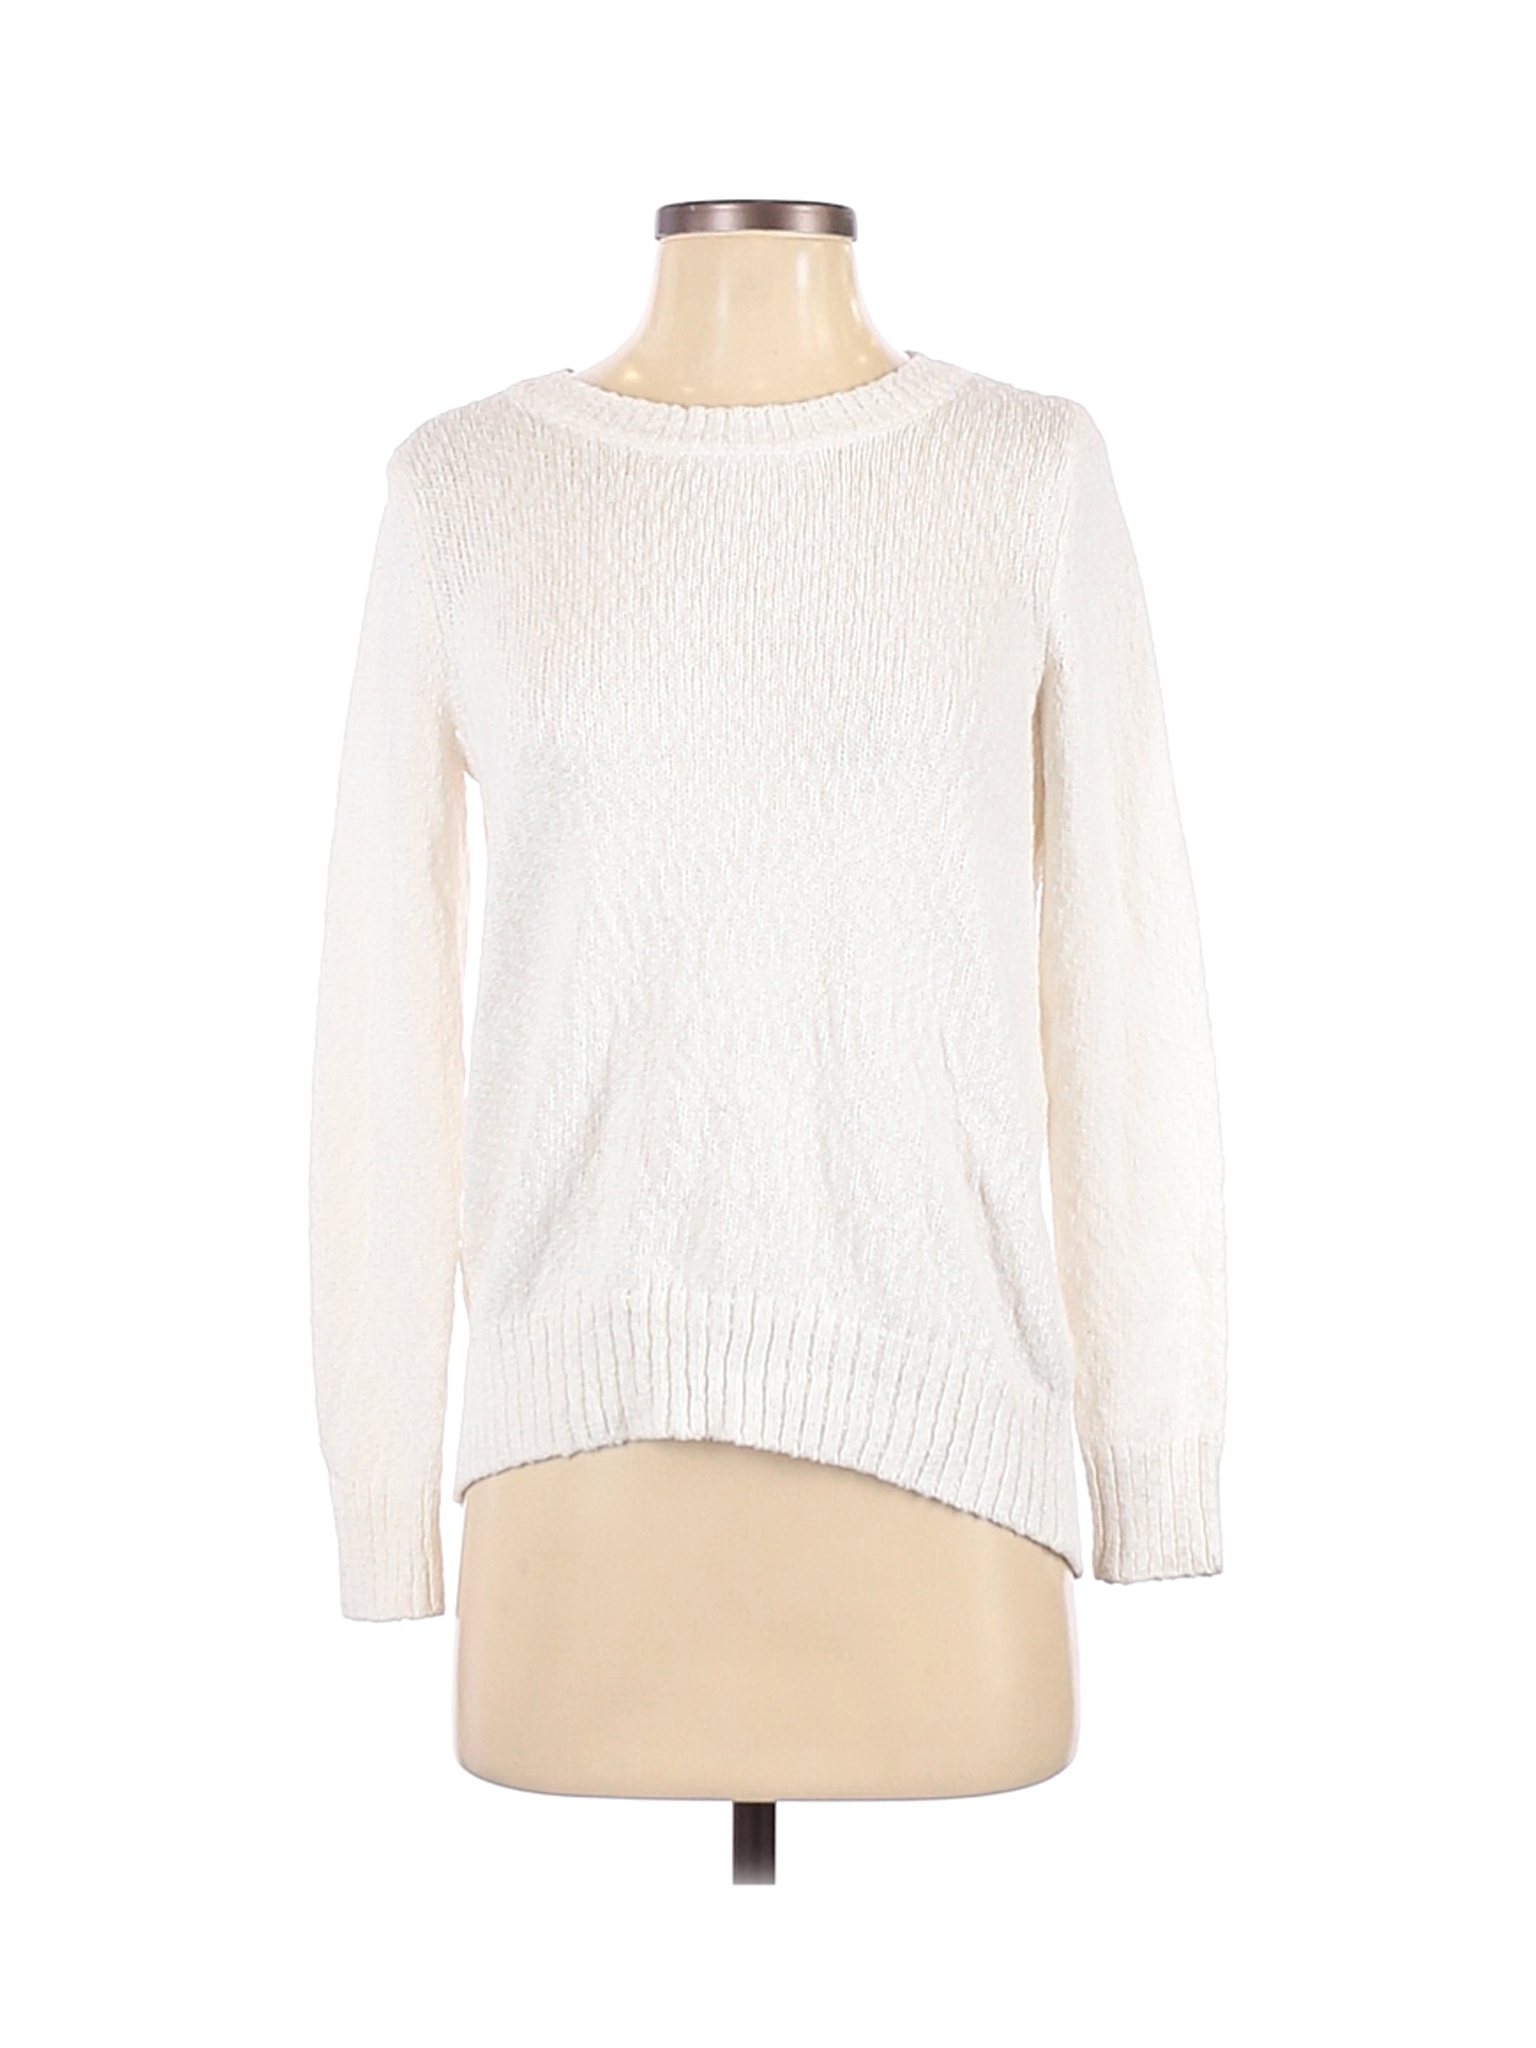 Old Navy Women White Pullover Sweater S | eBay